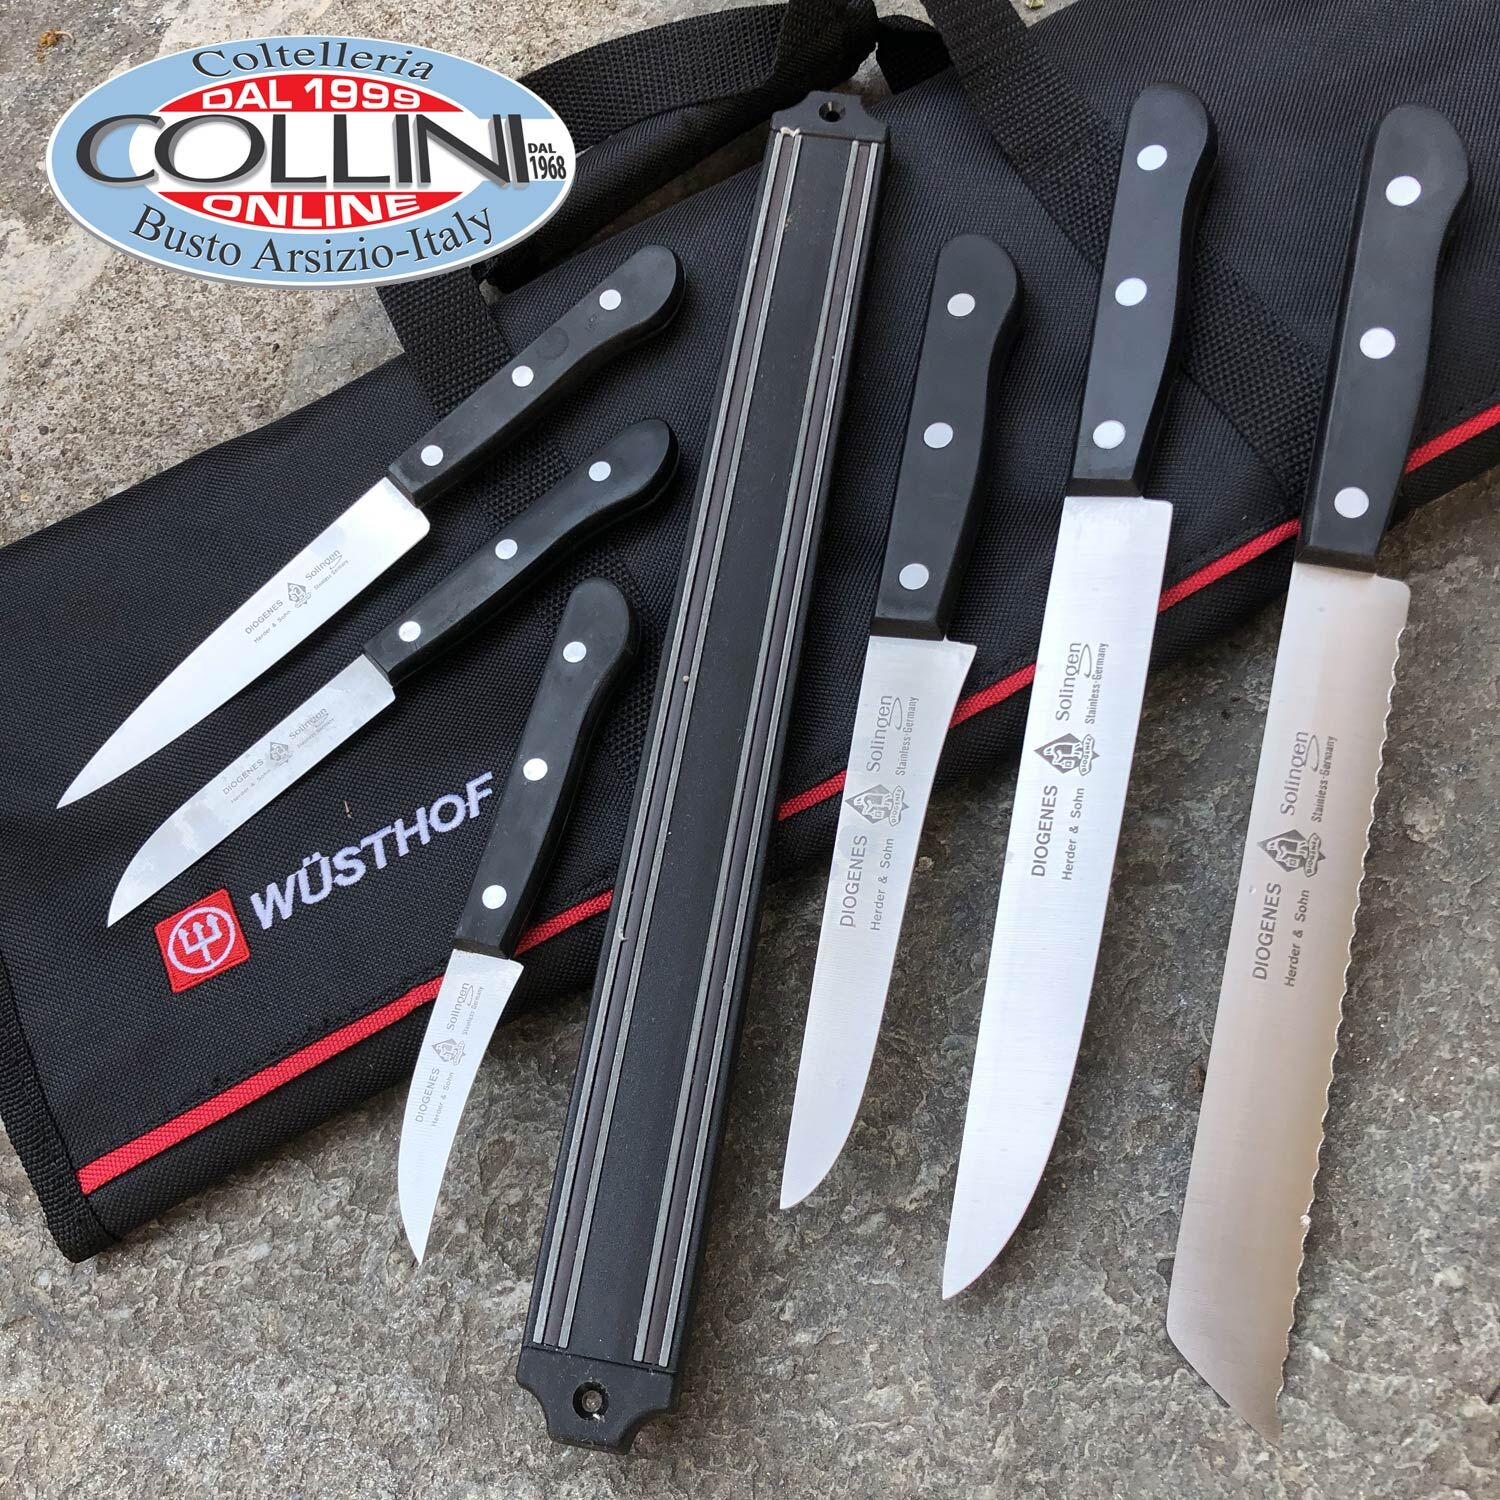 Calamita coltelli cucina 2 pz 33 cm organizzatore coltelli cucina calamita coltelli da cucina coltelli magnetico coltelli da cucina calamita coltelli da cucina calamita per coltelli a parete 